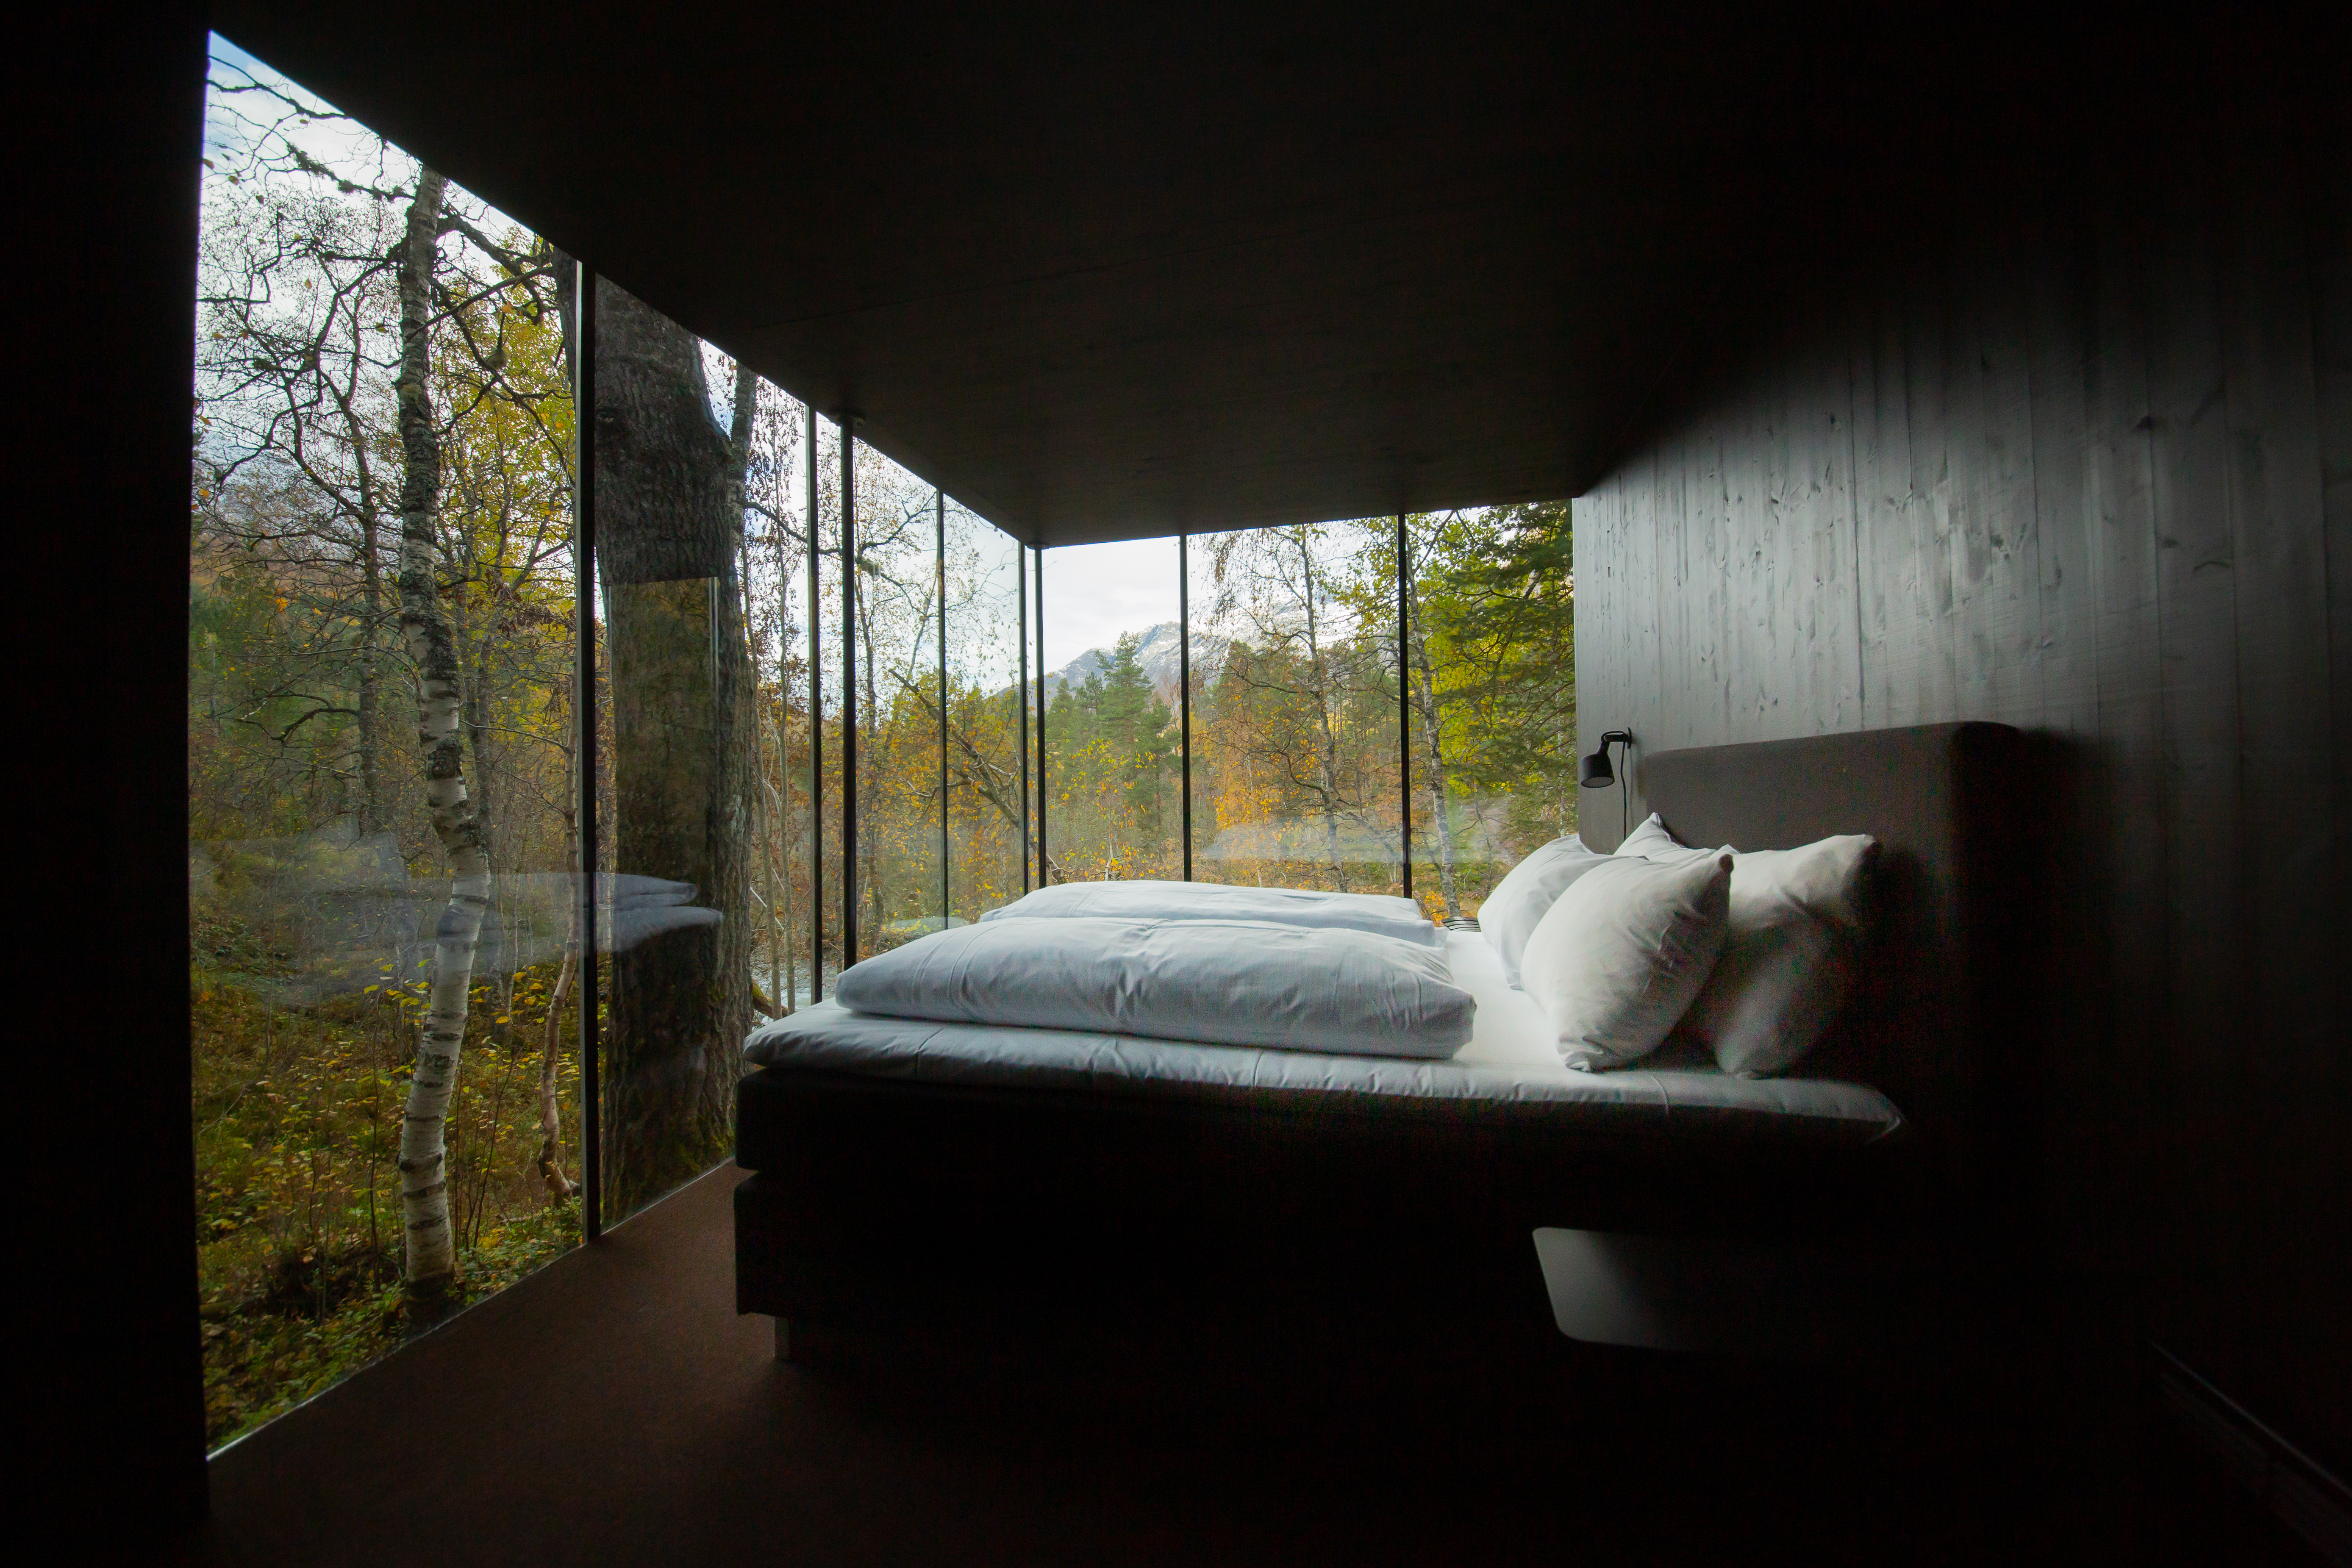 En säng i ett av hotellrummen på Juvet Landskapshotell i Norge